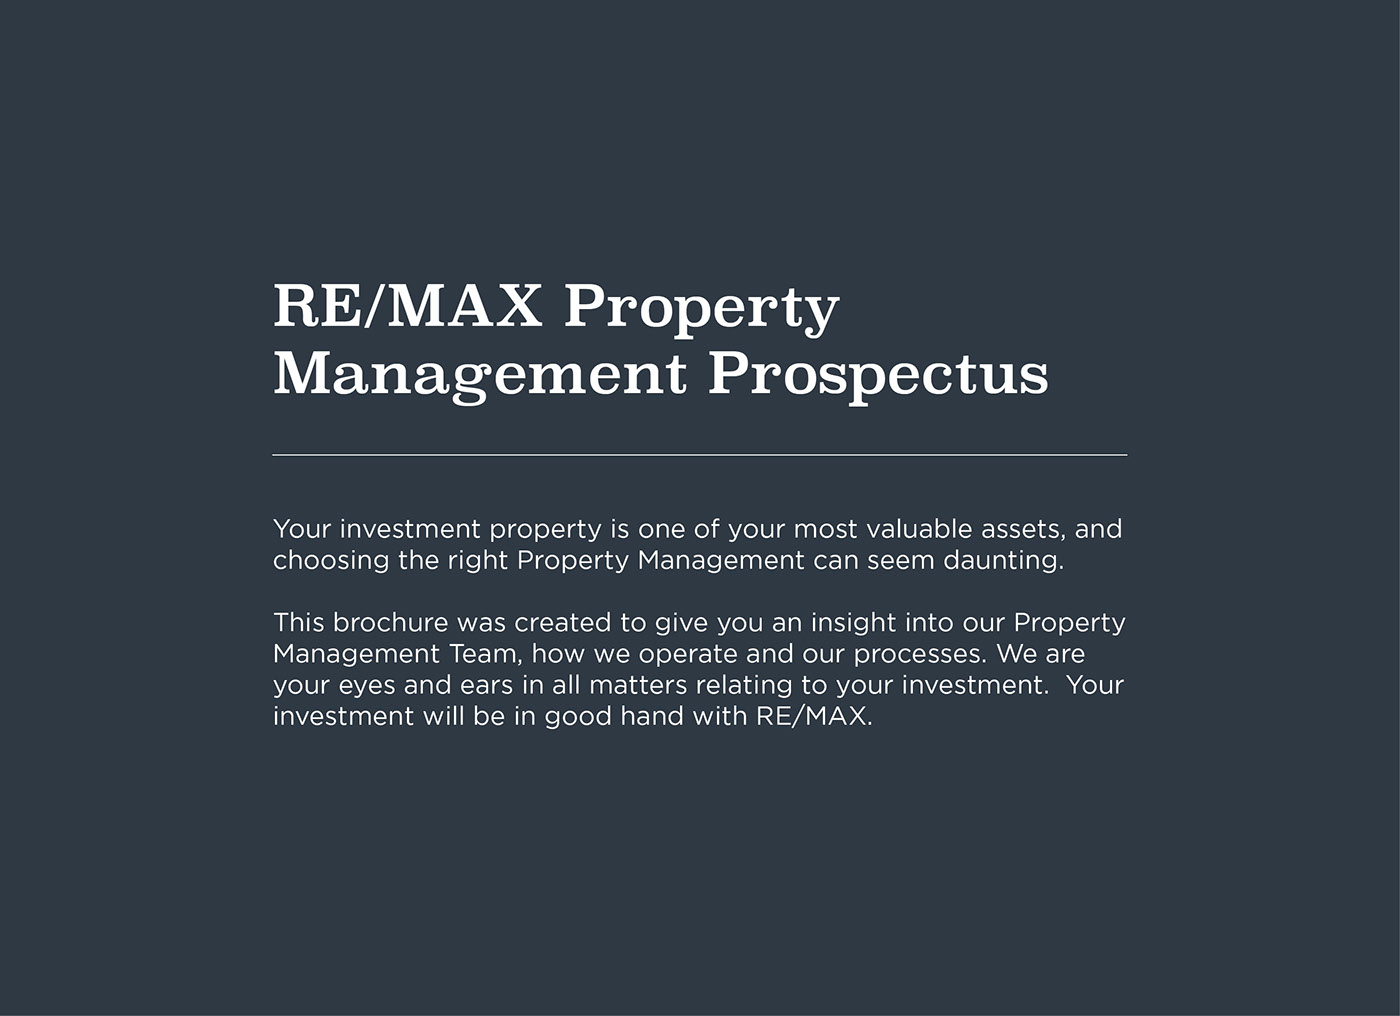 brochure prospectus property management real estate RE/MAX magazine Booklet Layout graphic design 